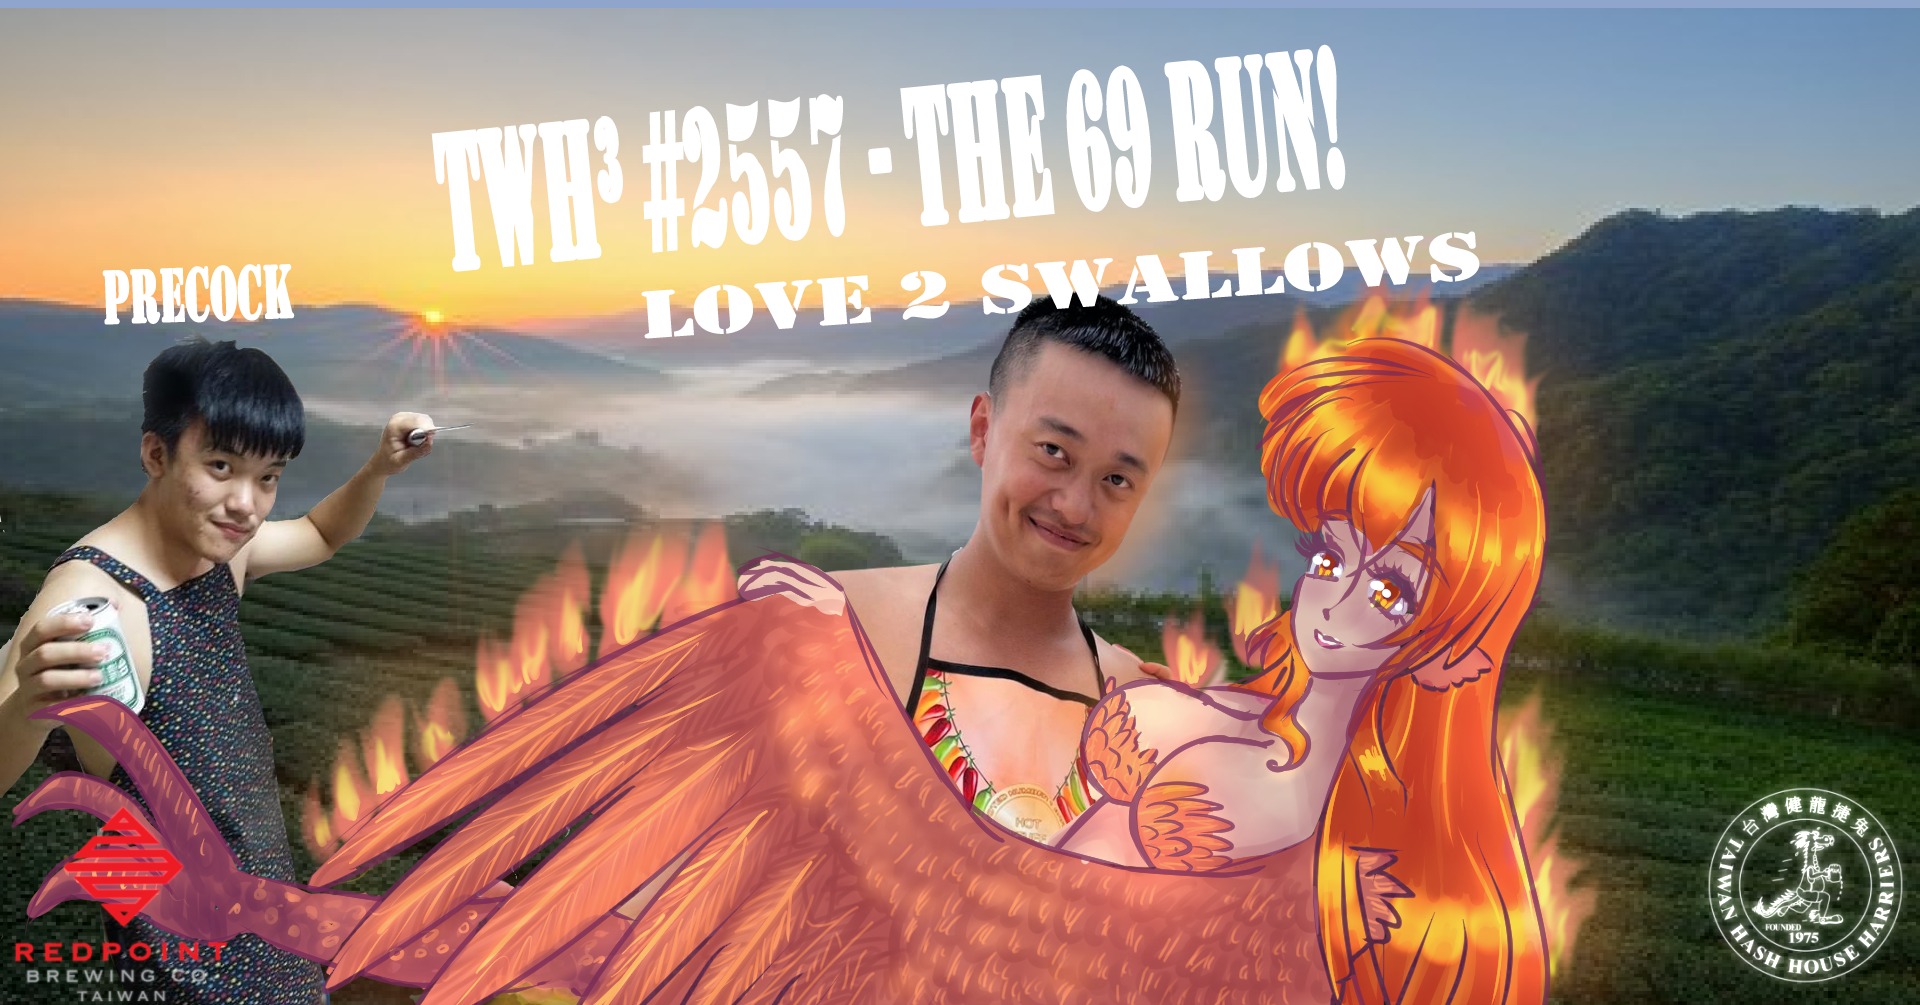 #2557 - The 69 Run!